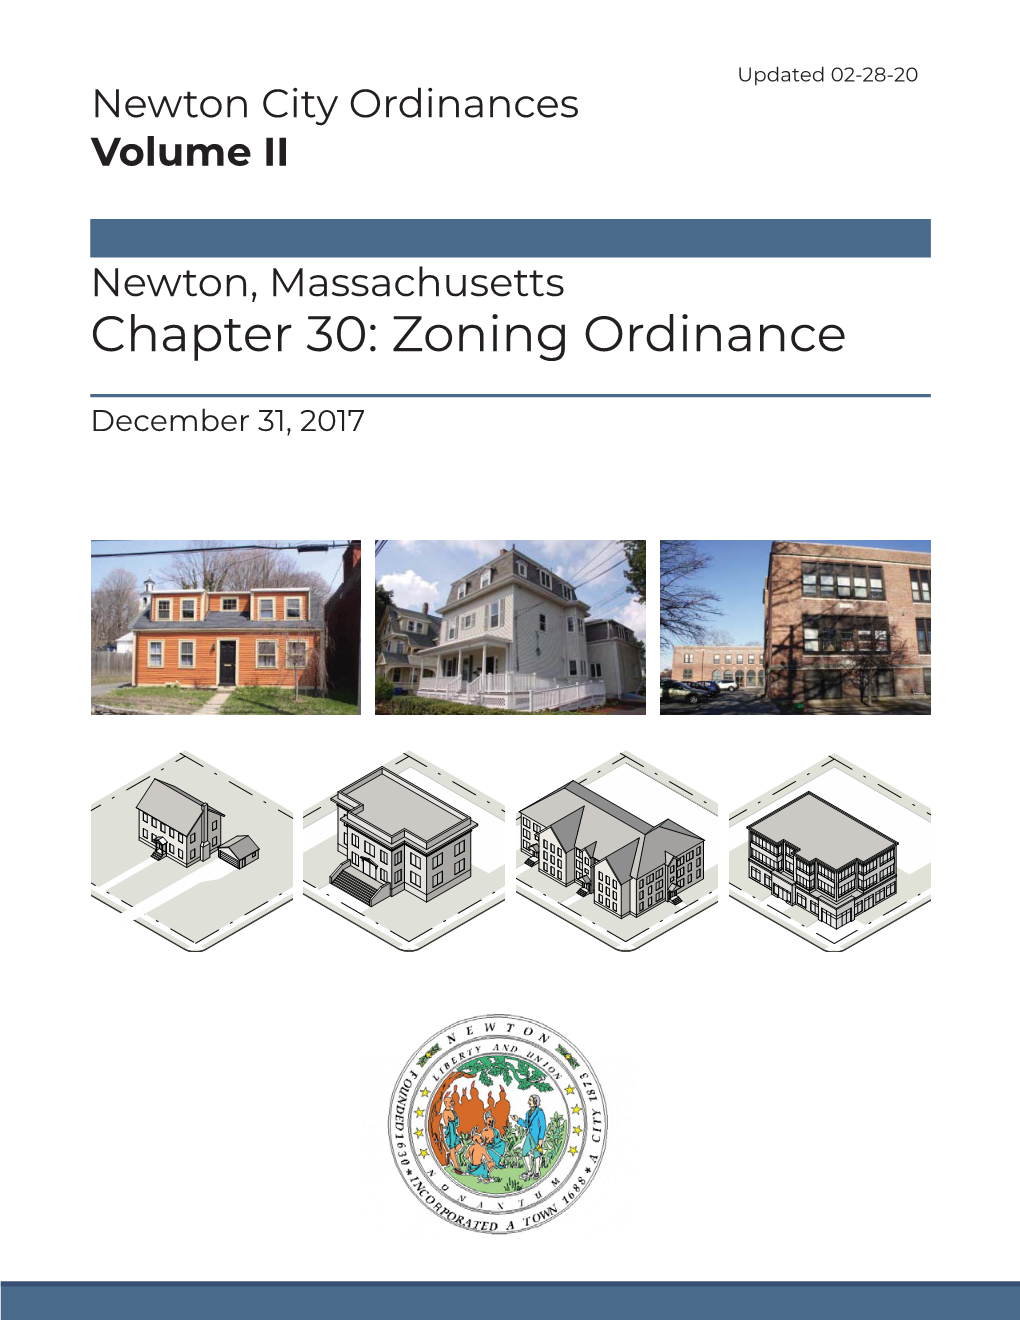 Chapter 30: Zoning Ordinance